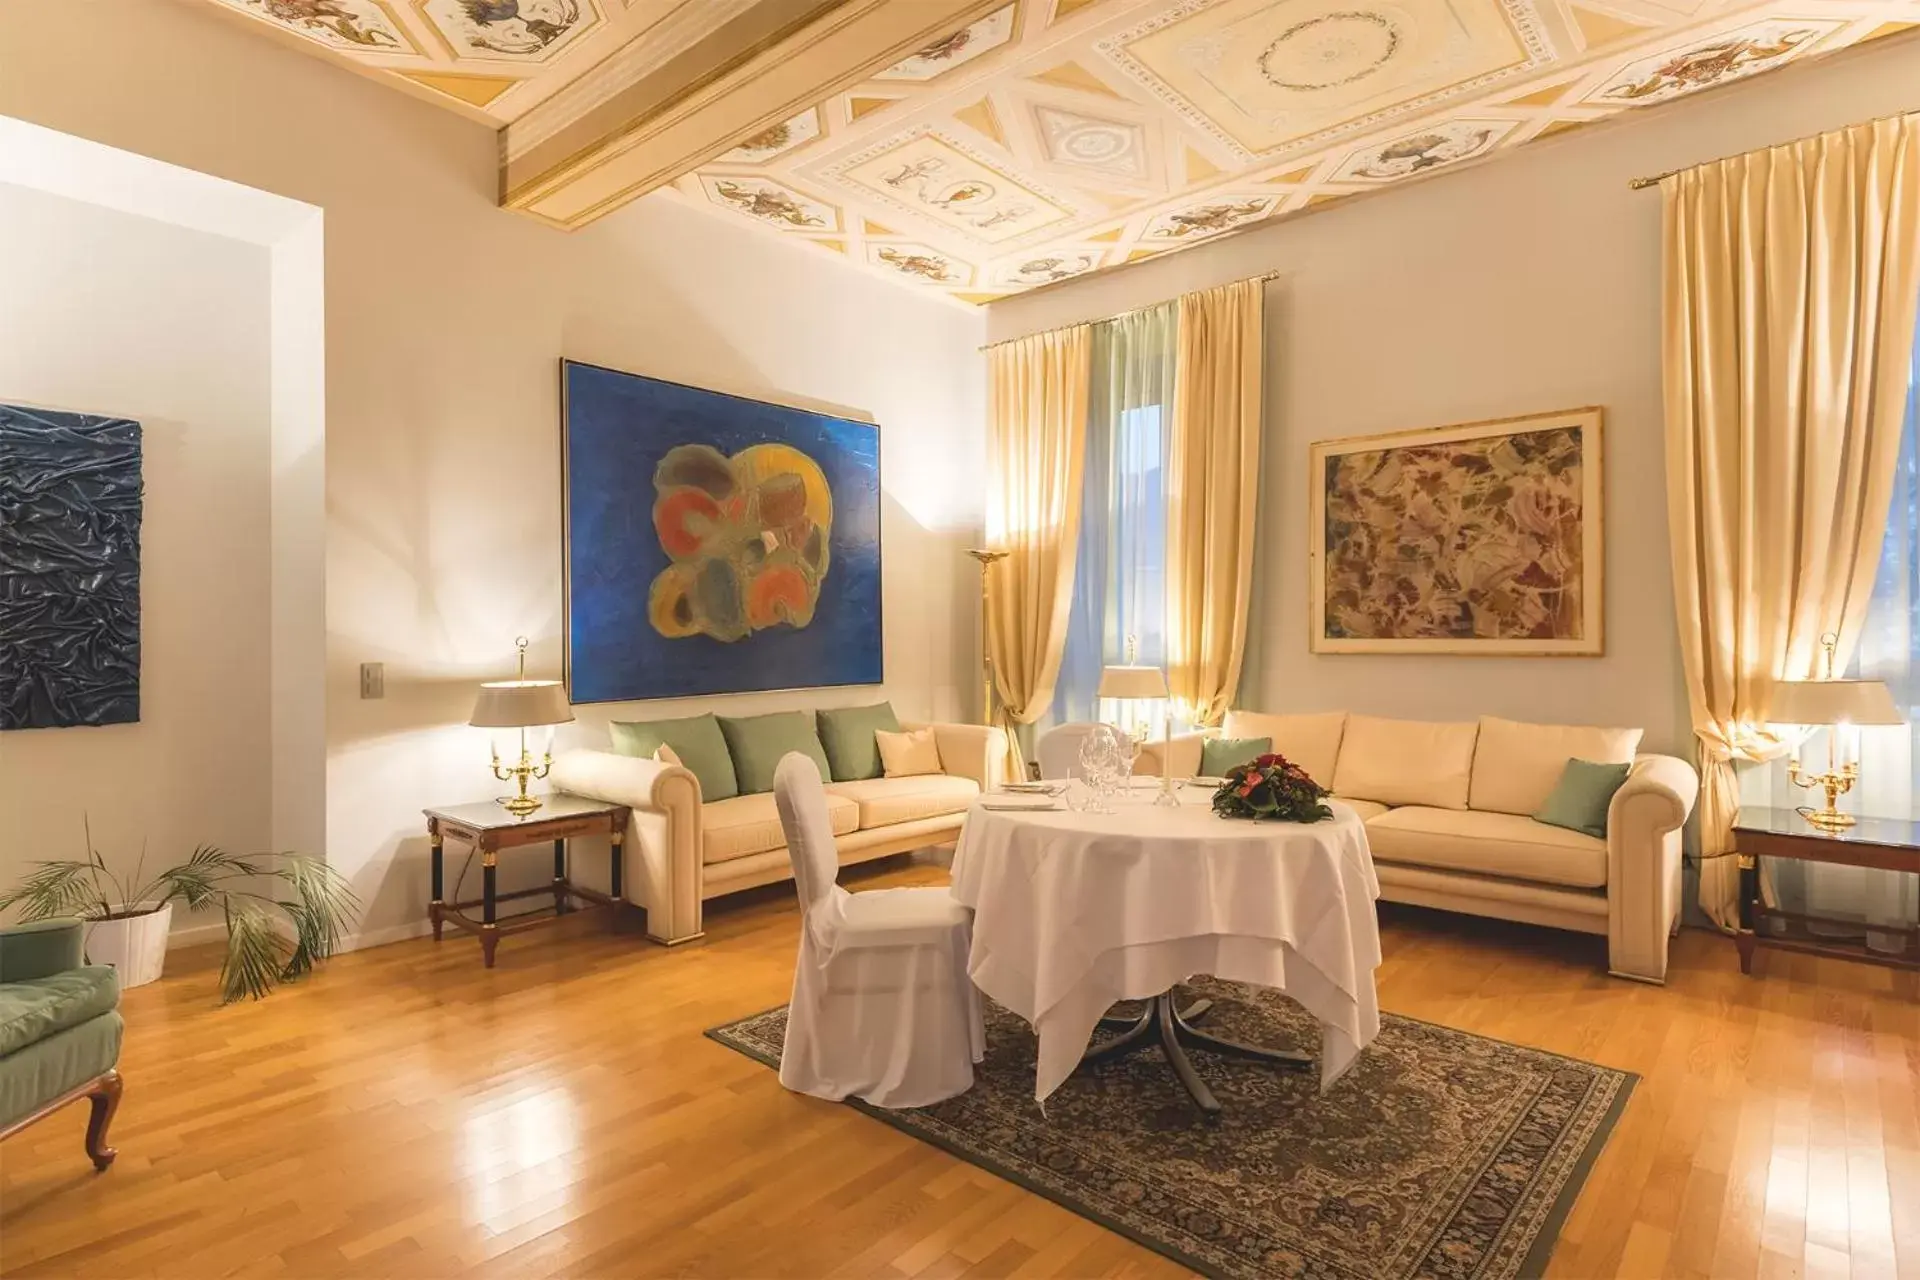 Banquet/Function facilities in Villa Sassa Hotel, Residence & Spa - Ticino Hotels Group